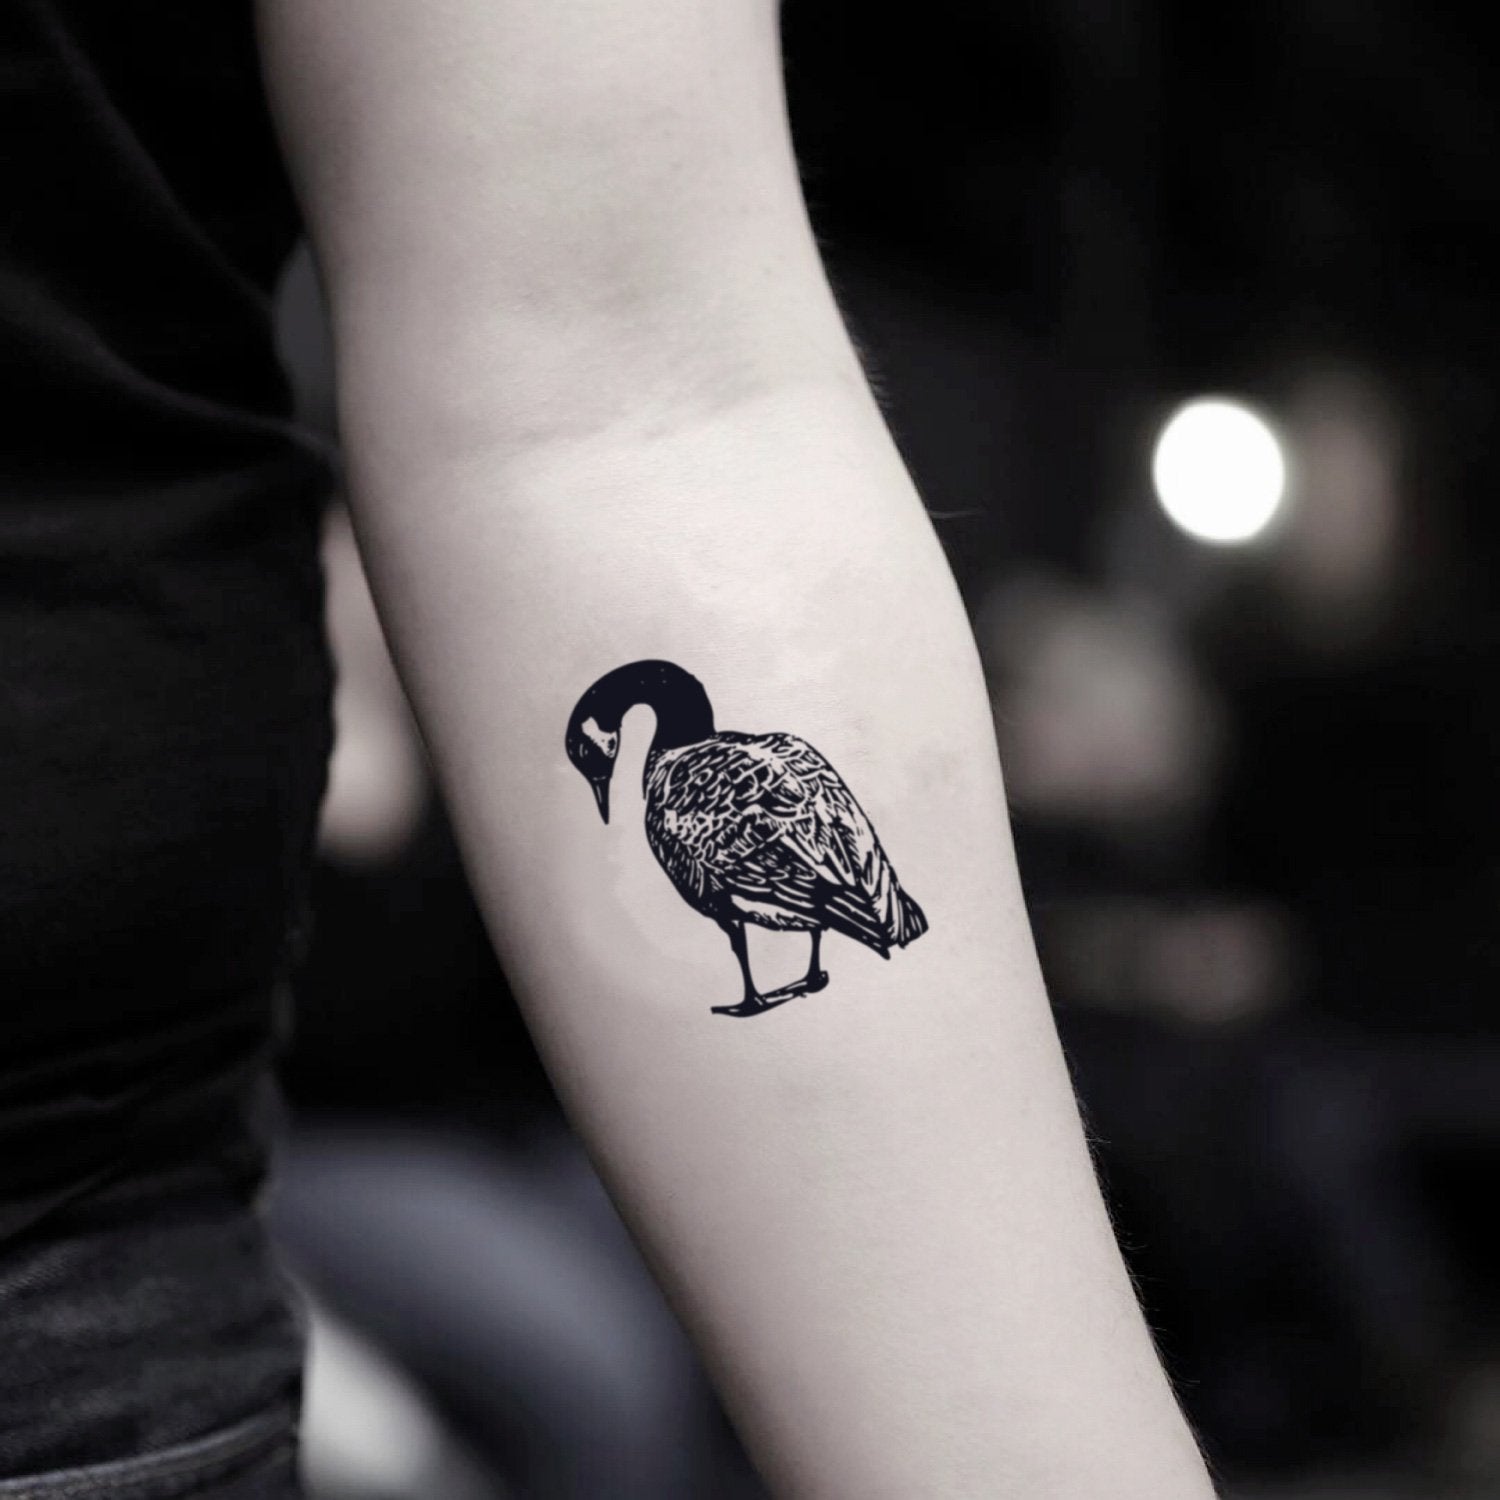 fake small goose animal temporary tattoo sticker design idea on inner arm